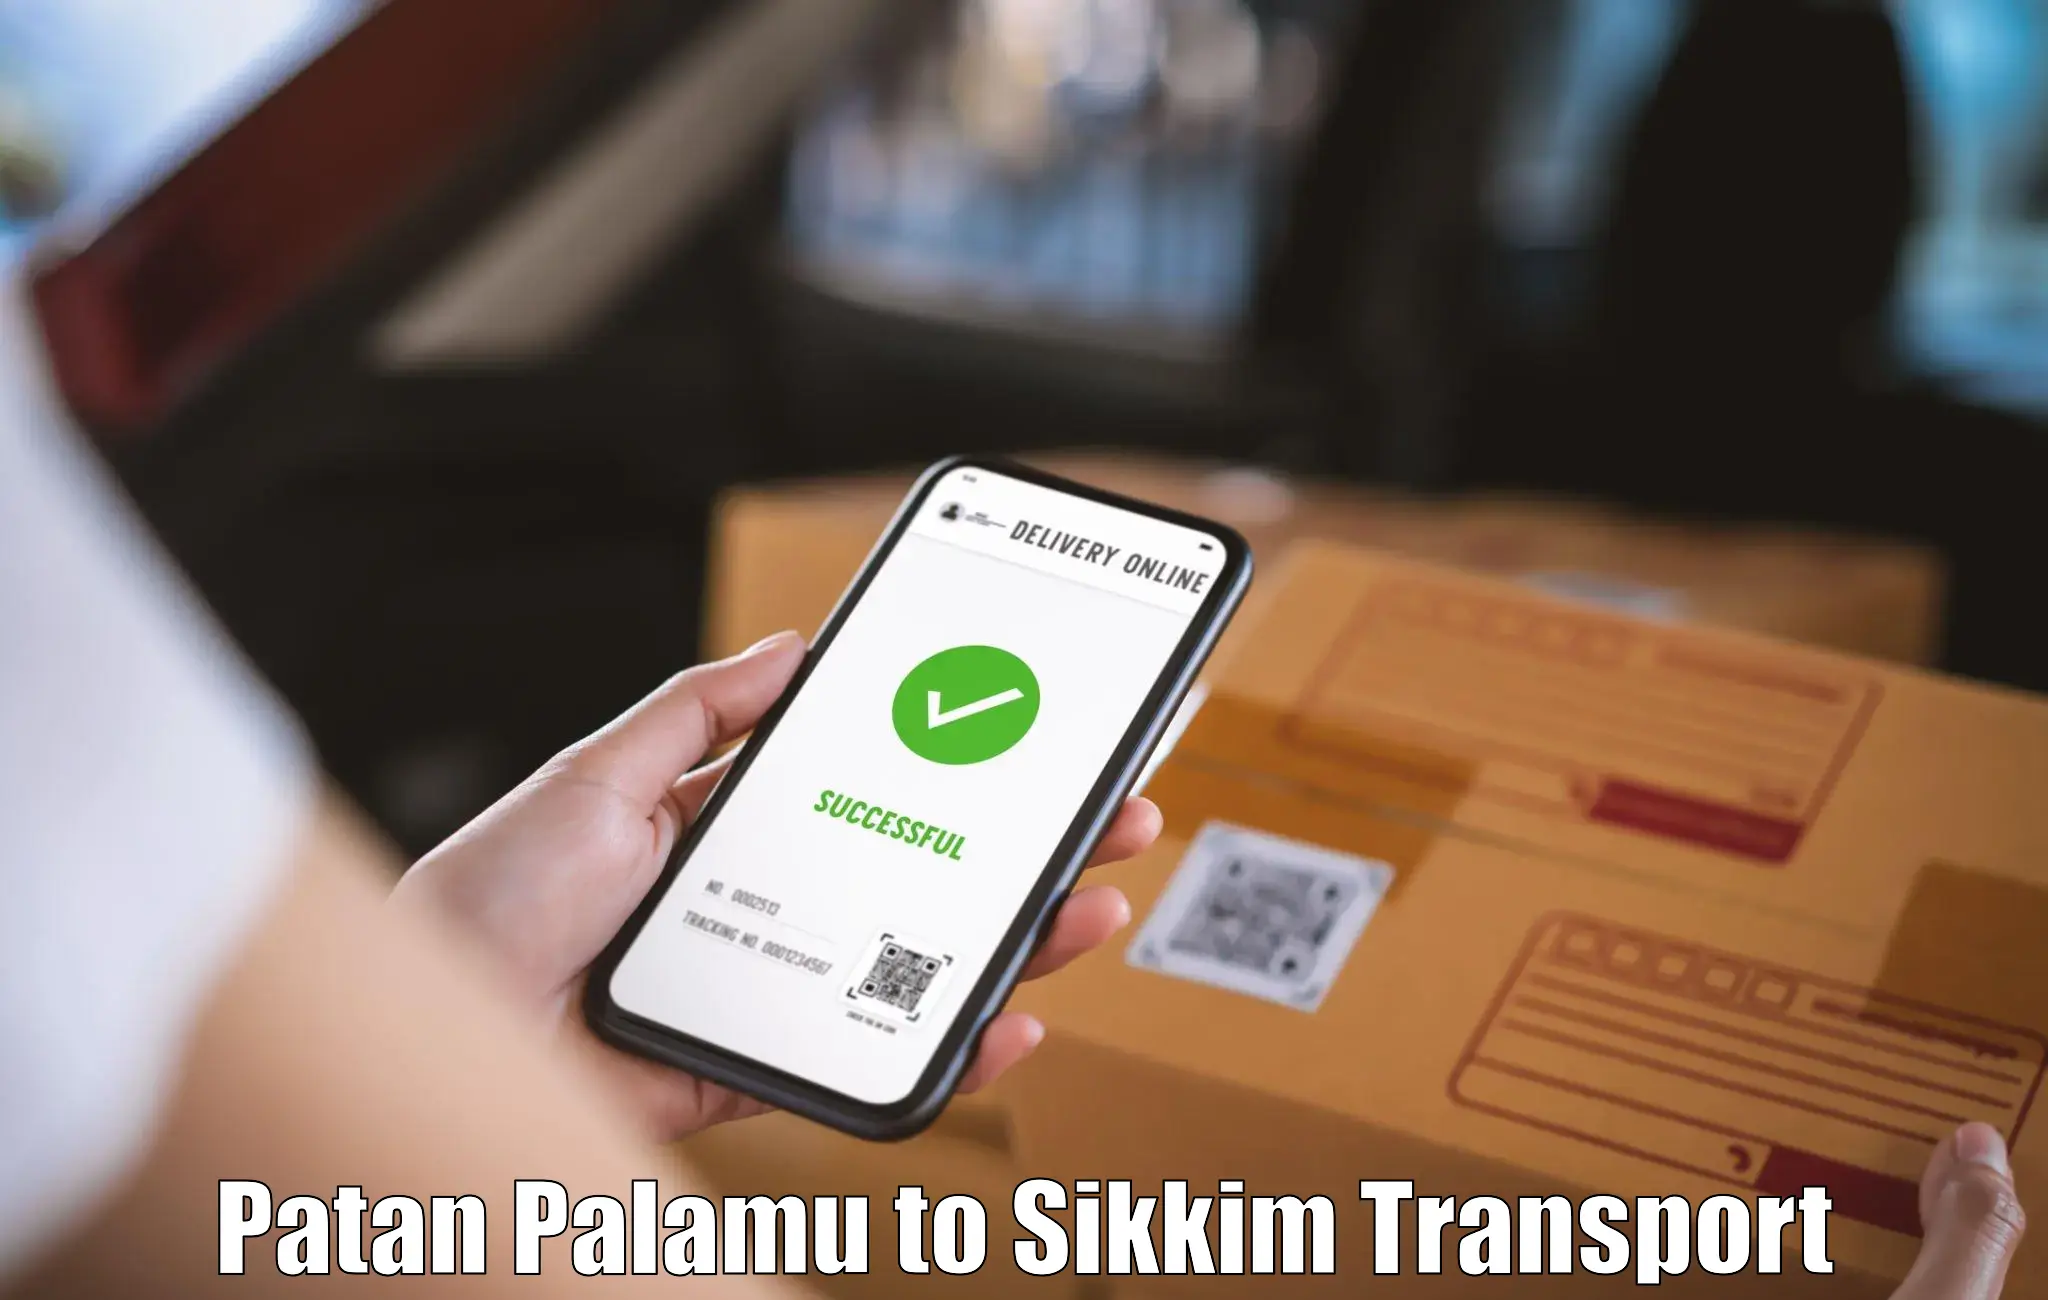 Transport shared services Patan Palamu to Gangtok